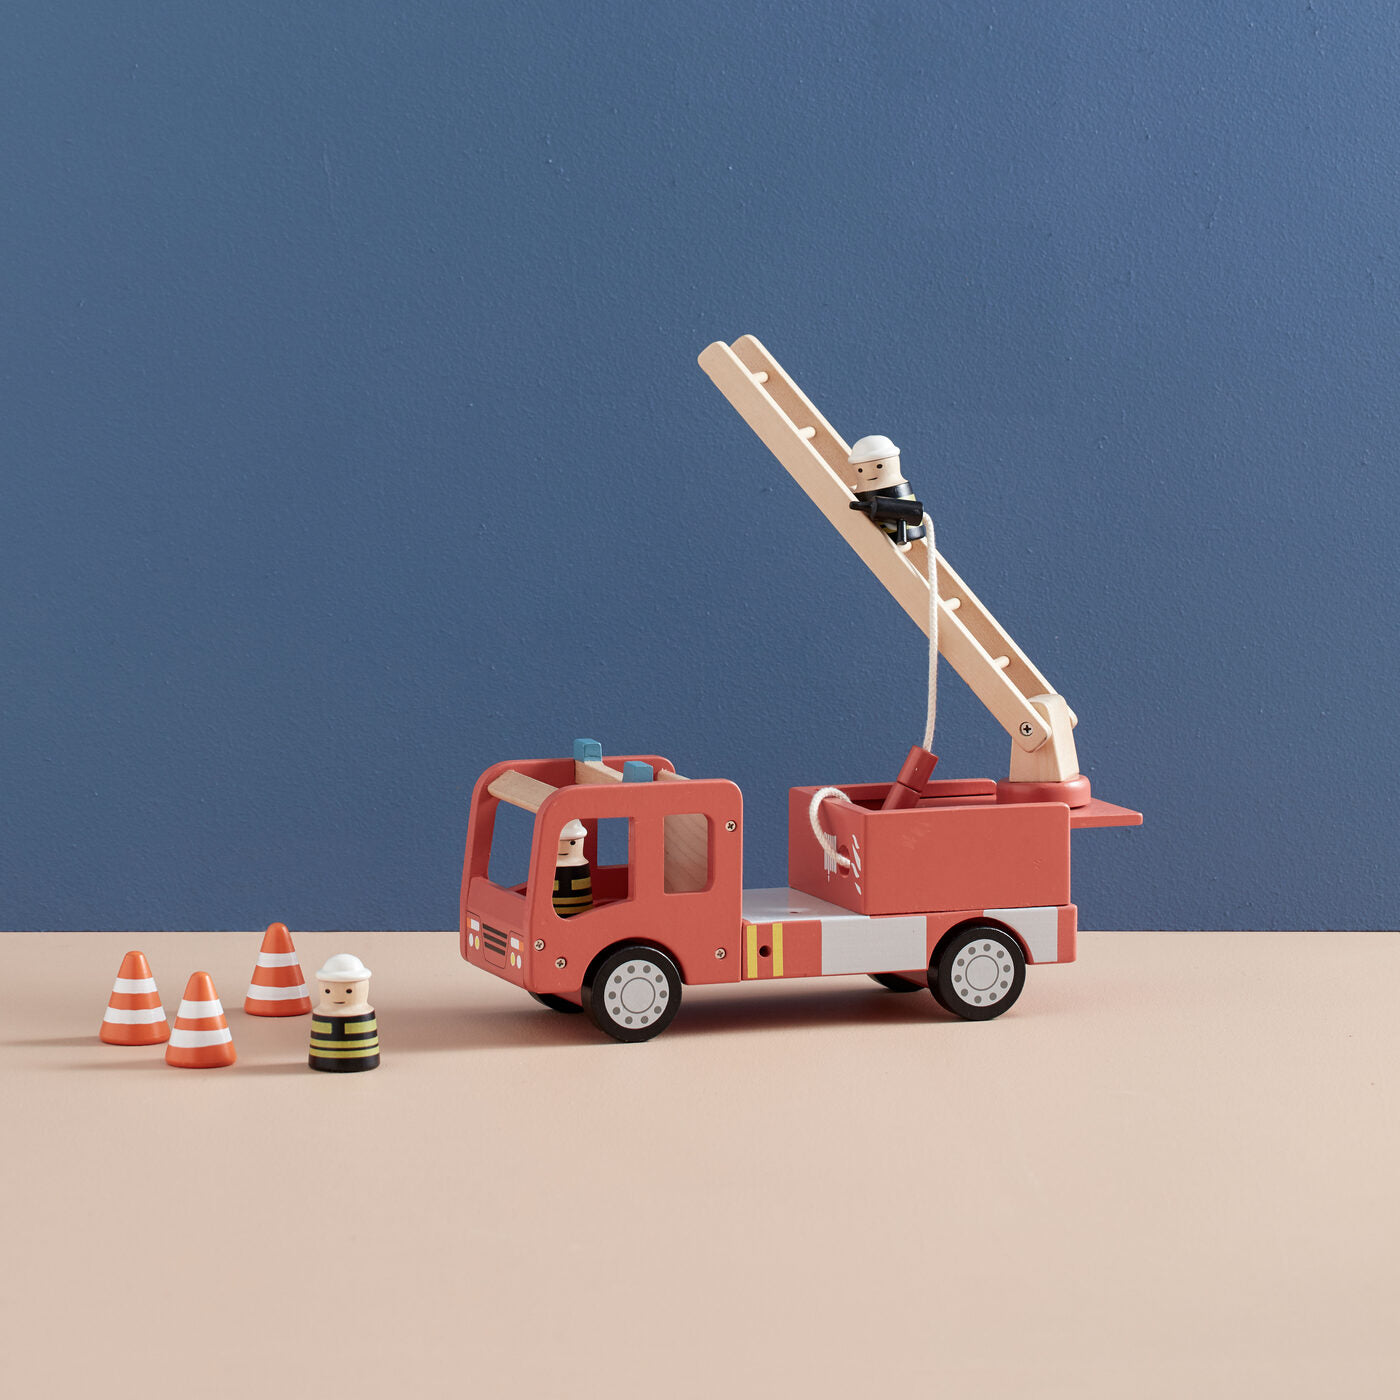 Toy fire truck/Zjarrfikse druri-Kid's Concept